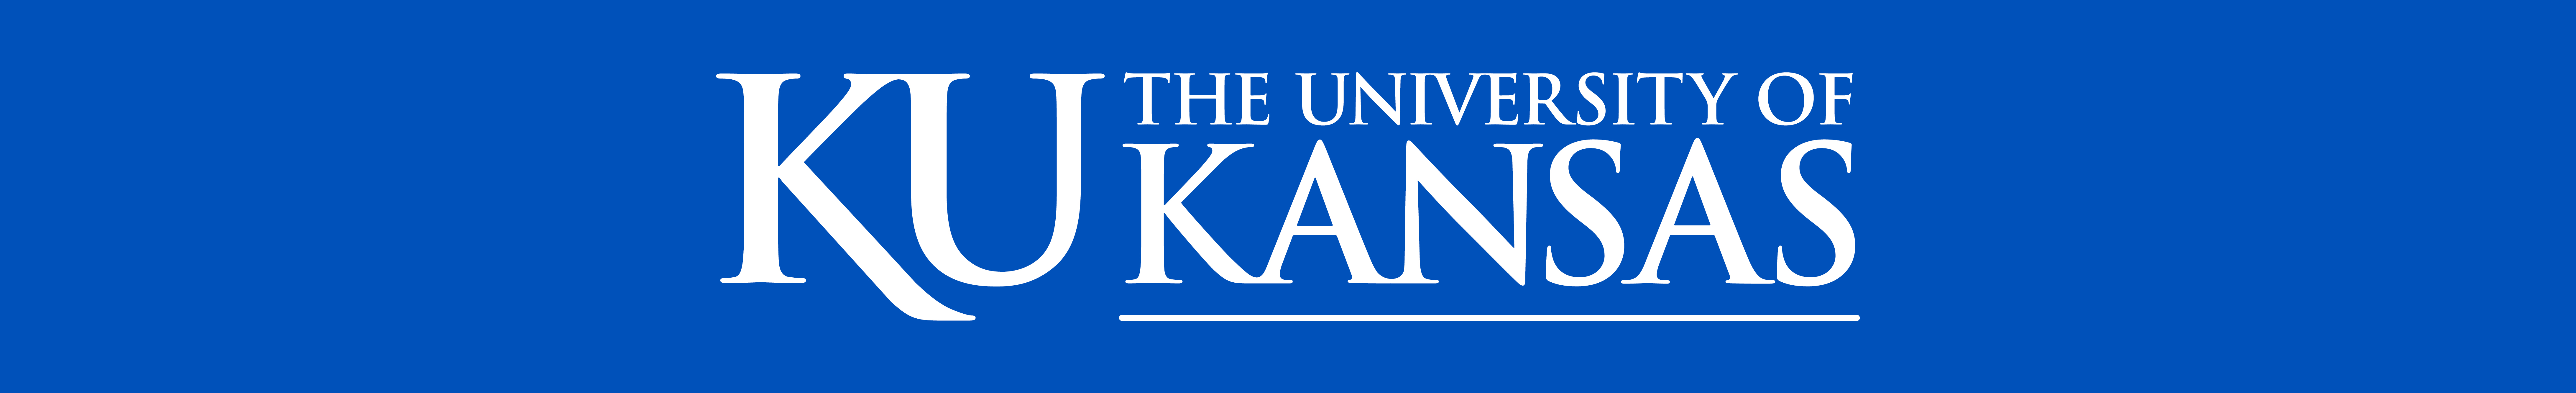 Horizontal university signature in white on a blue background.